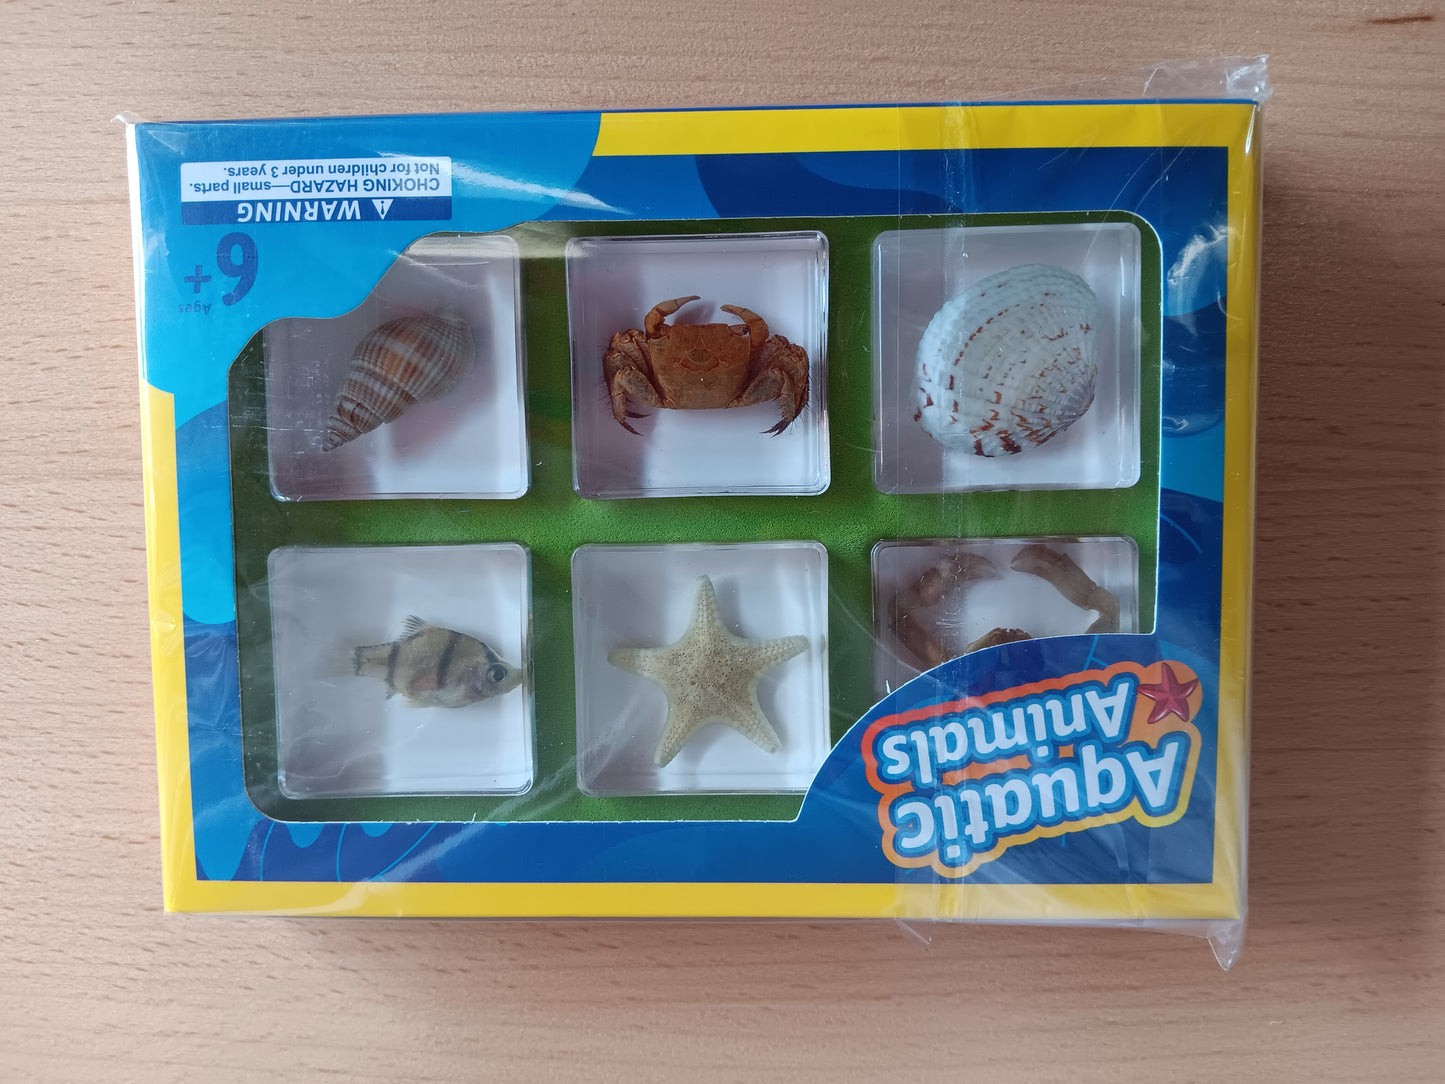 6 Aquatic Marine Animals Resin Epoxy Specimens Gift Set For Children Style B Crab Starfish